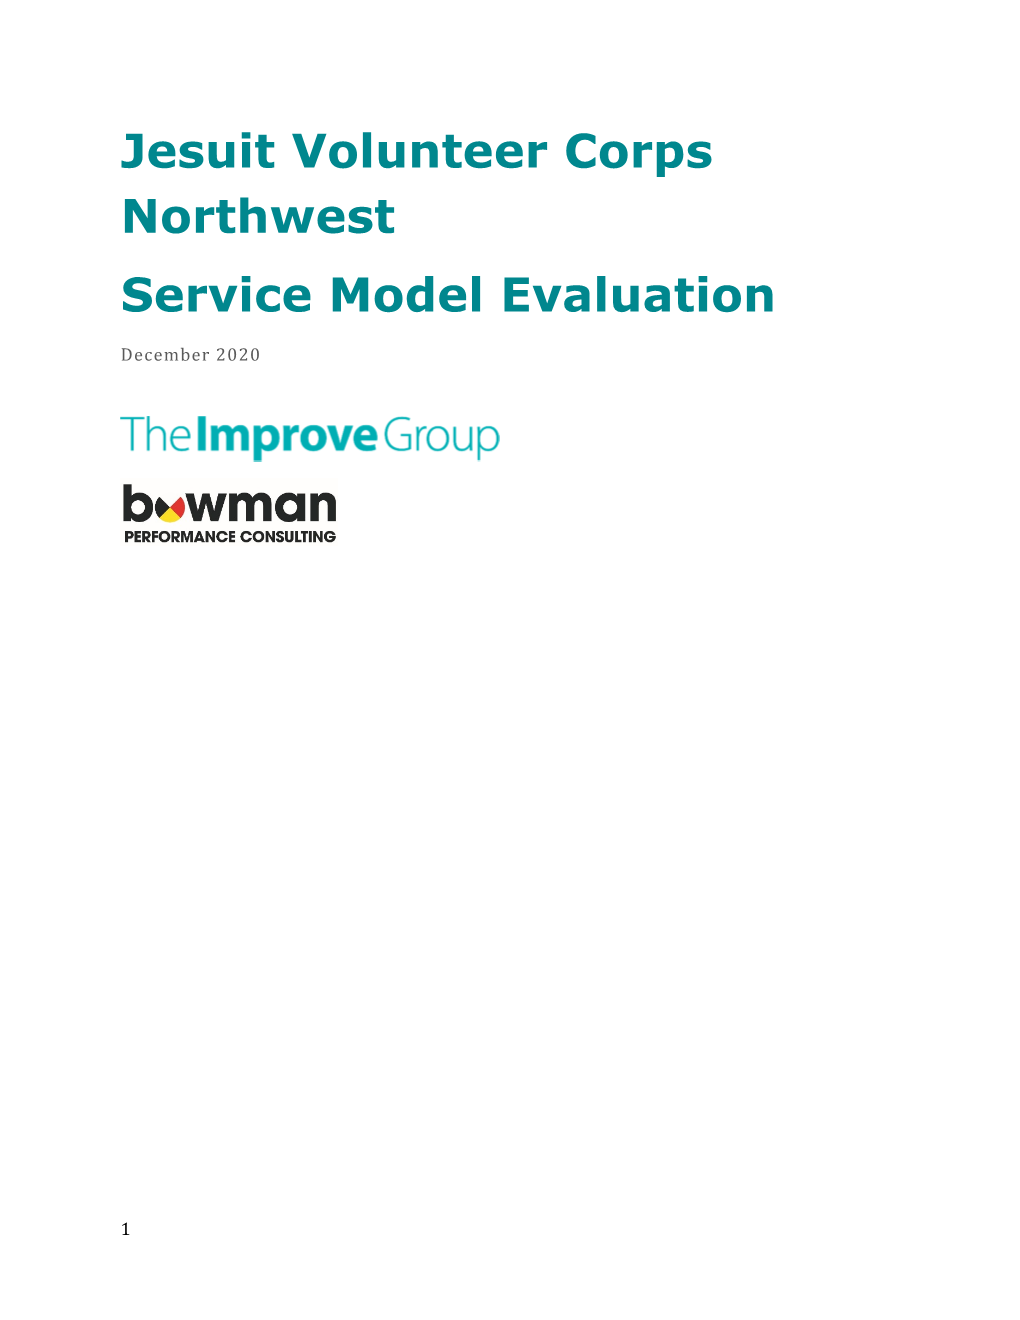 Jesuit Volunteer Corps Northwest Service Model Evaluation